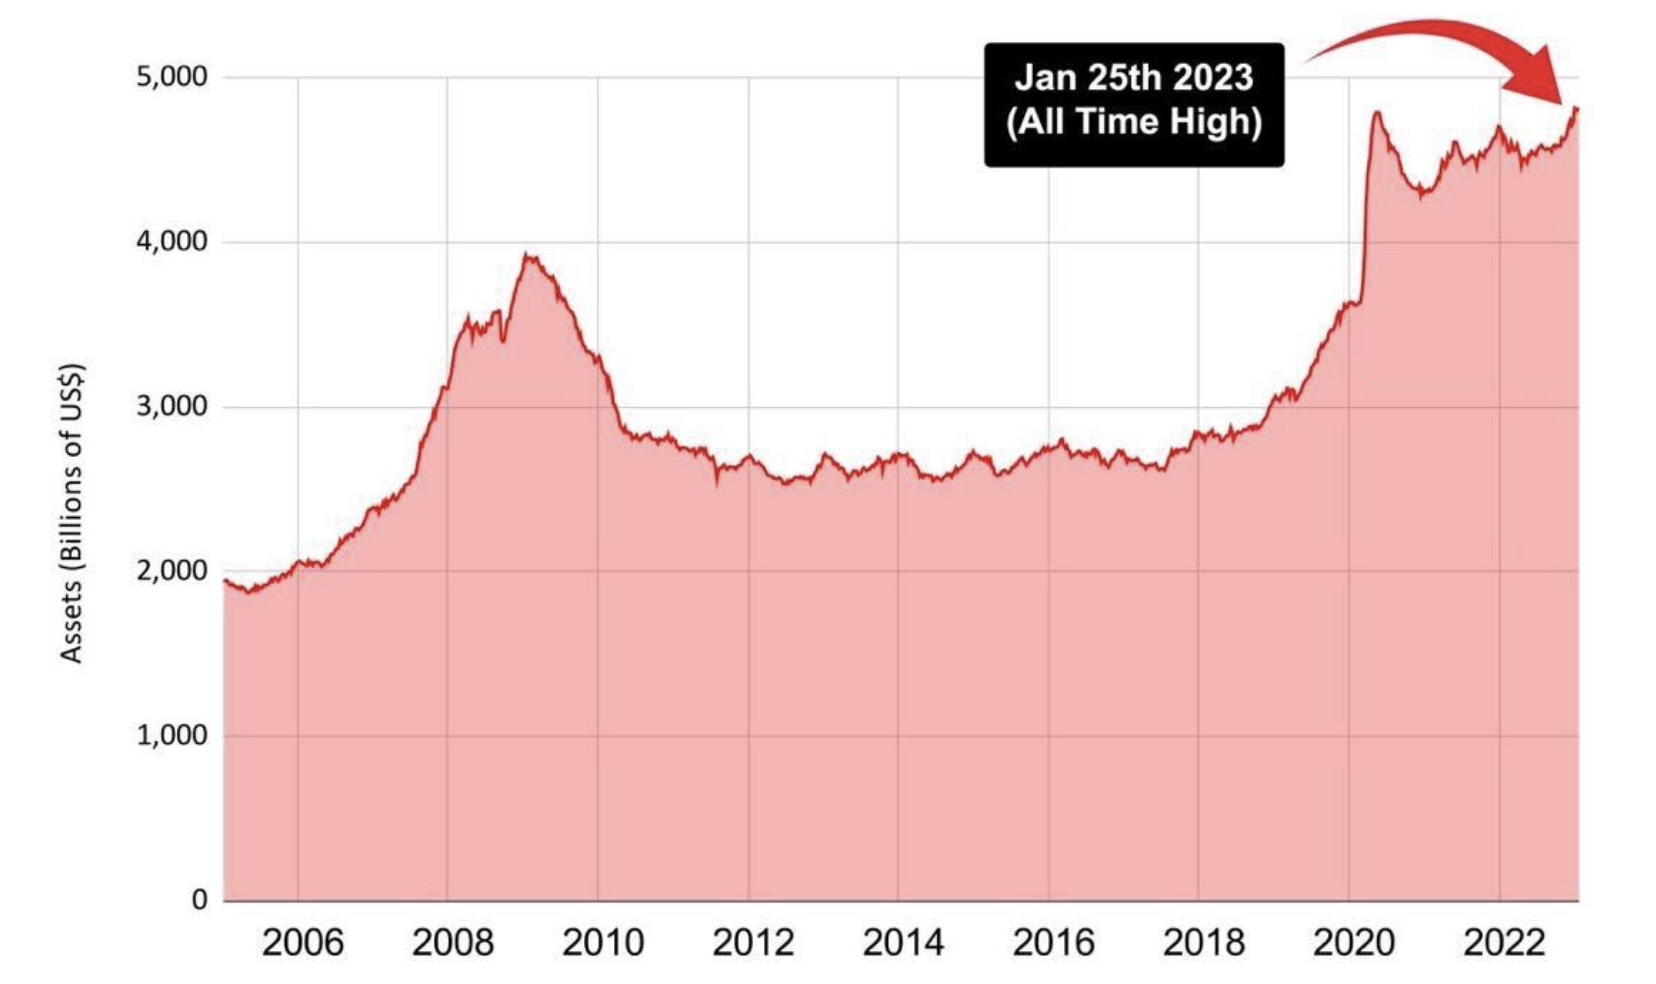 Investors cash levels reach all time high, Jan 2023